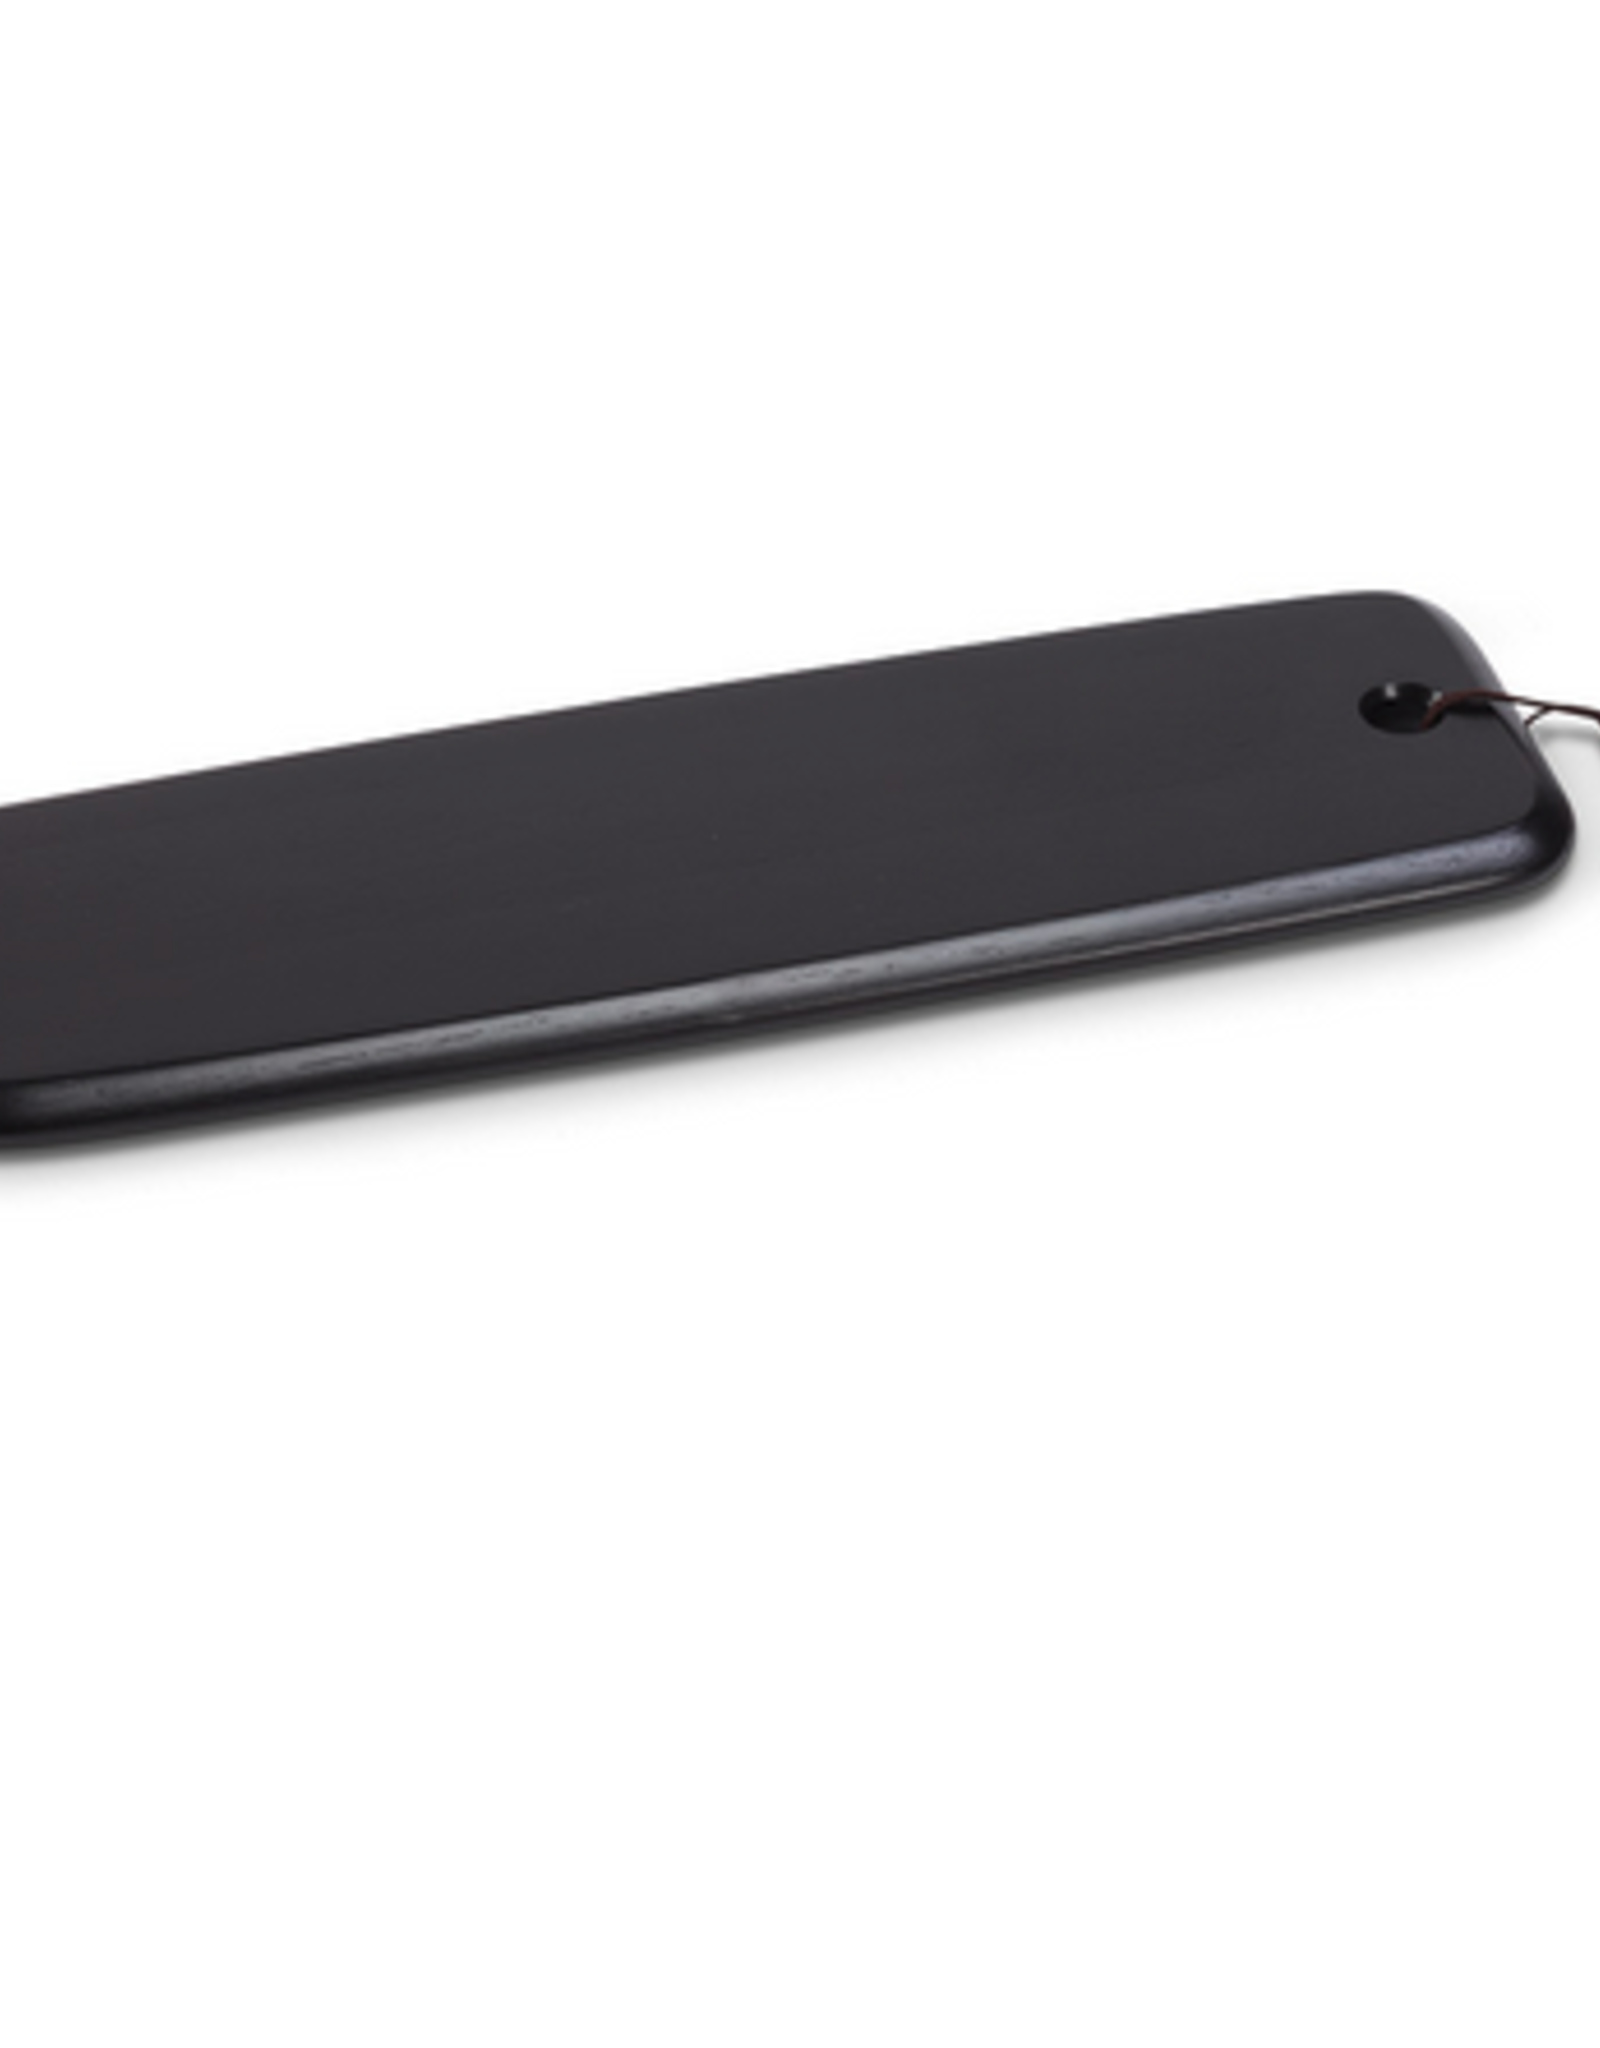 Large Matte Black Slim Board with Strap W6.5" L26"